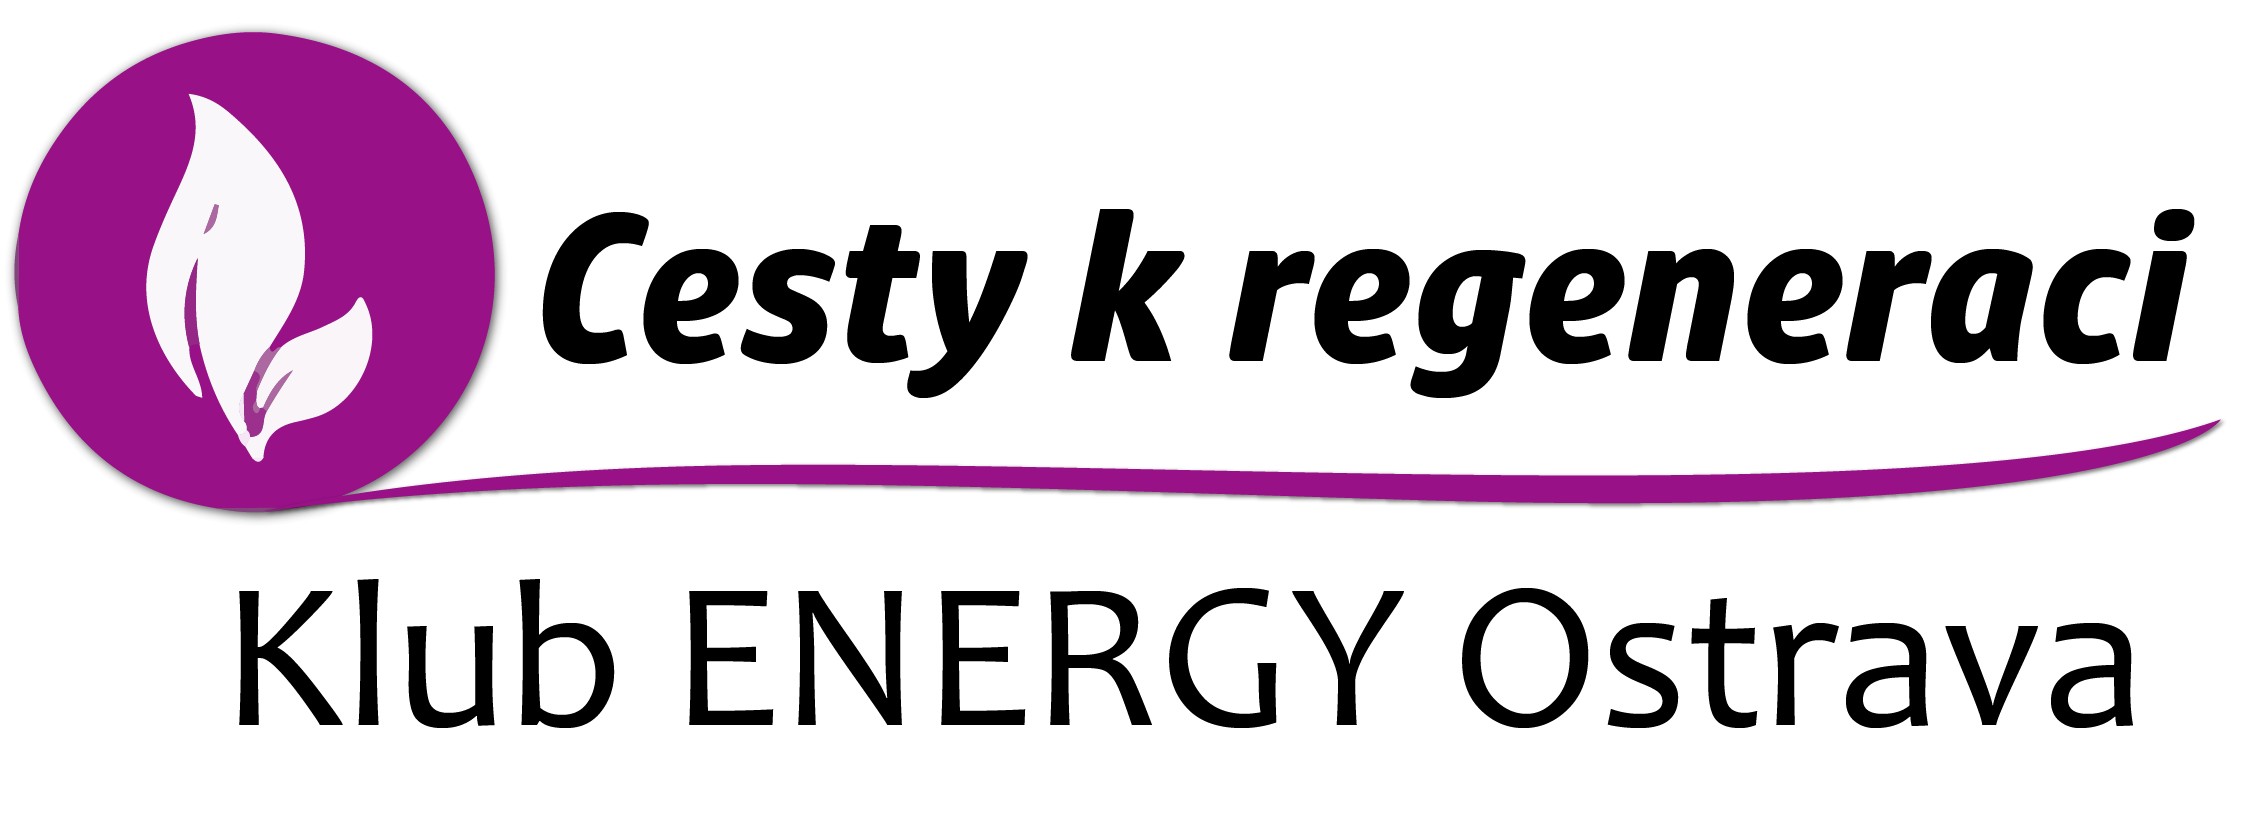 Klub Energy Ostrava | Cesty k regeneraci